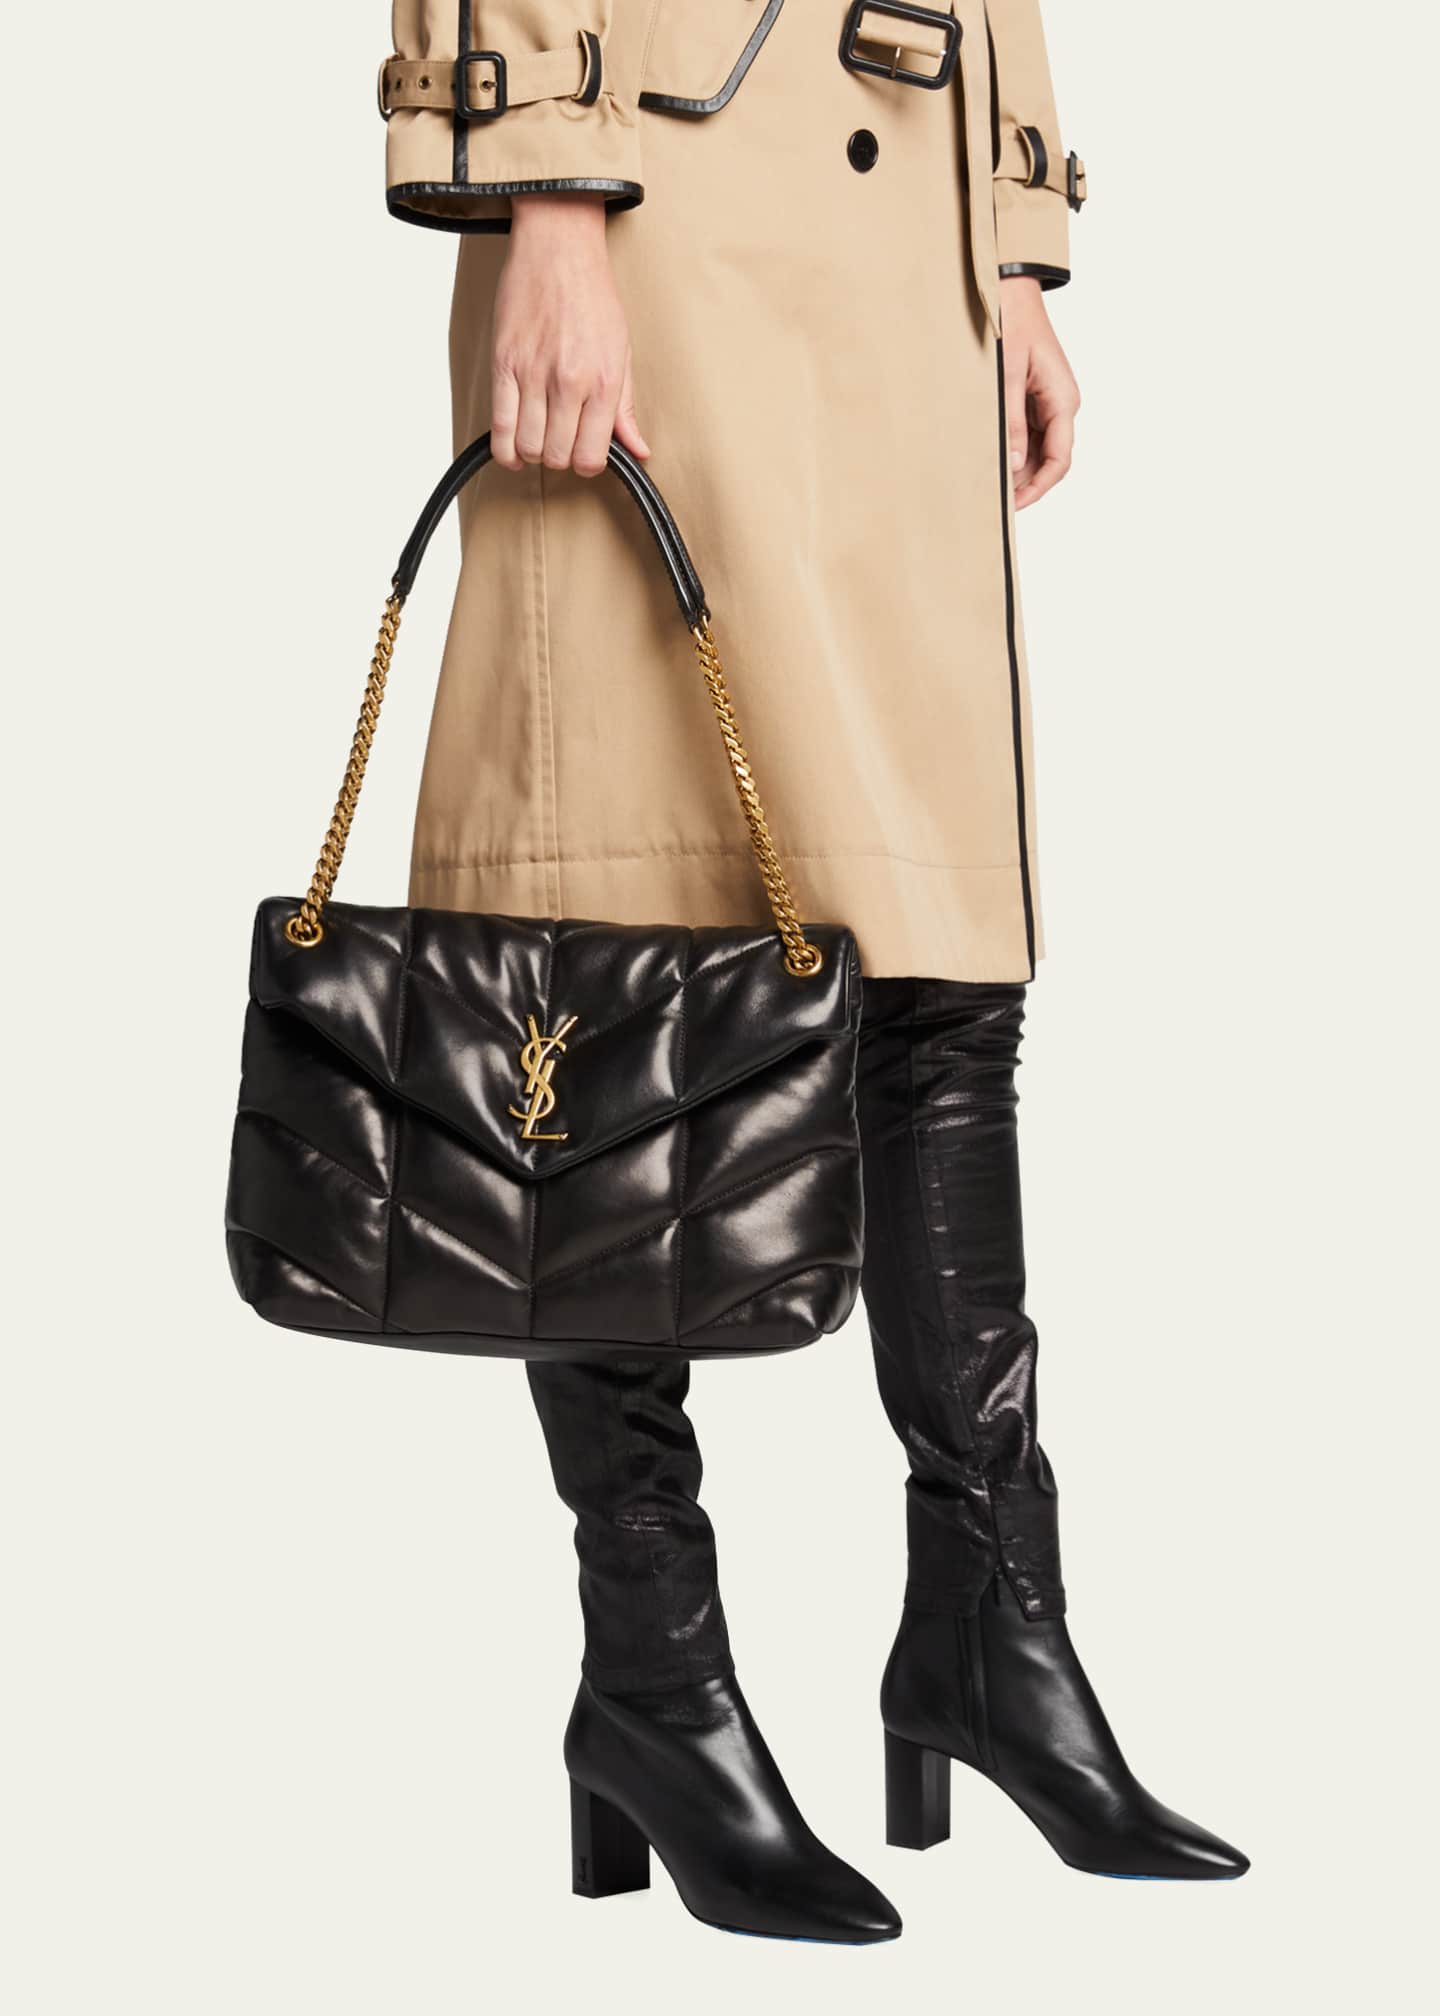 Saint Laurent Loulou Medium YSL Chain Shoulder Bag  Shoulder bag, Chain shoulder  bag, Saint laurent handbags